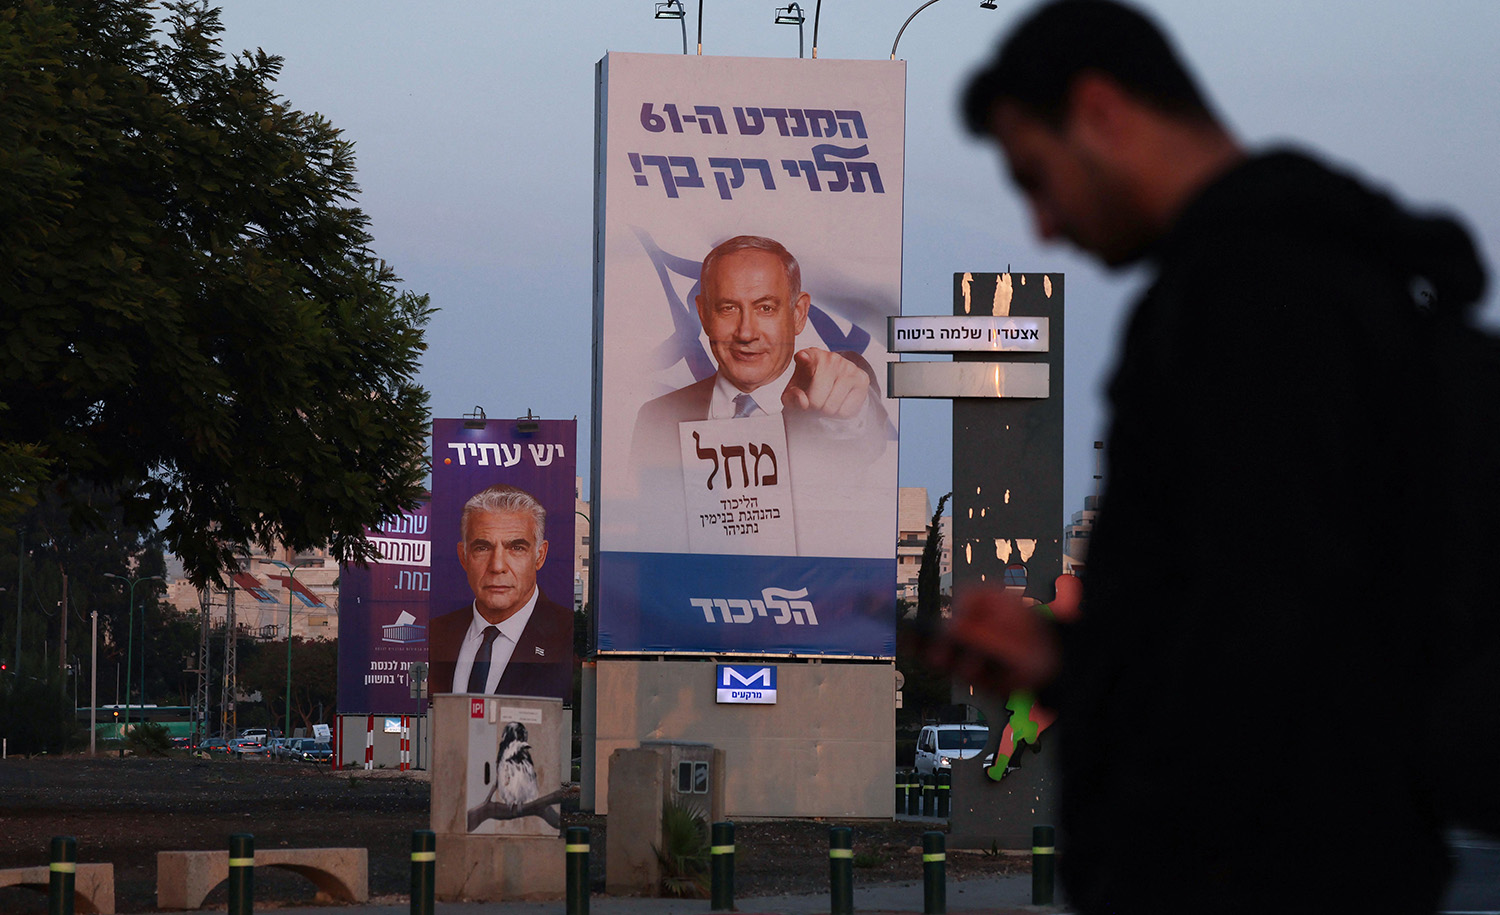 
Election banners in Tel Aviv on October 27, 2022. AHMAD GHARABLI/AFP via Getty Images.






